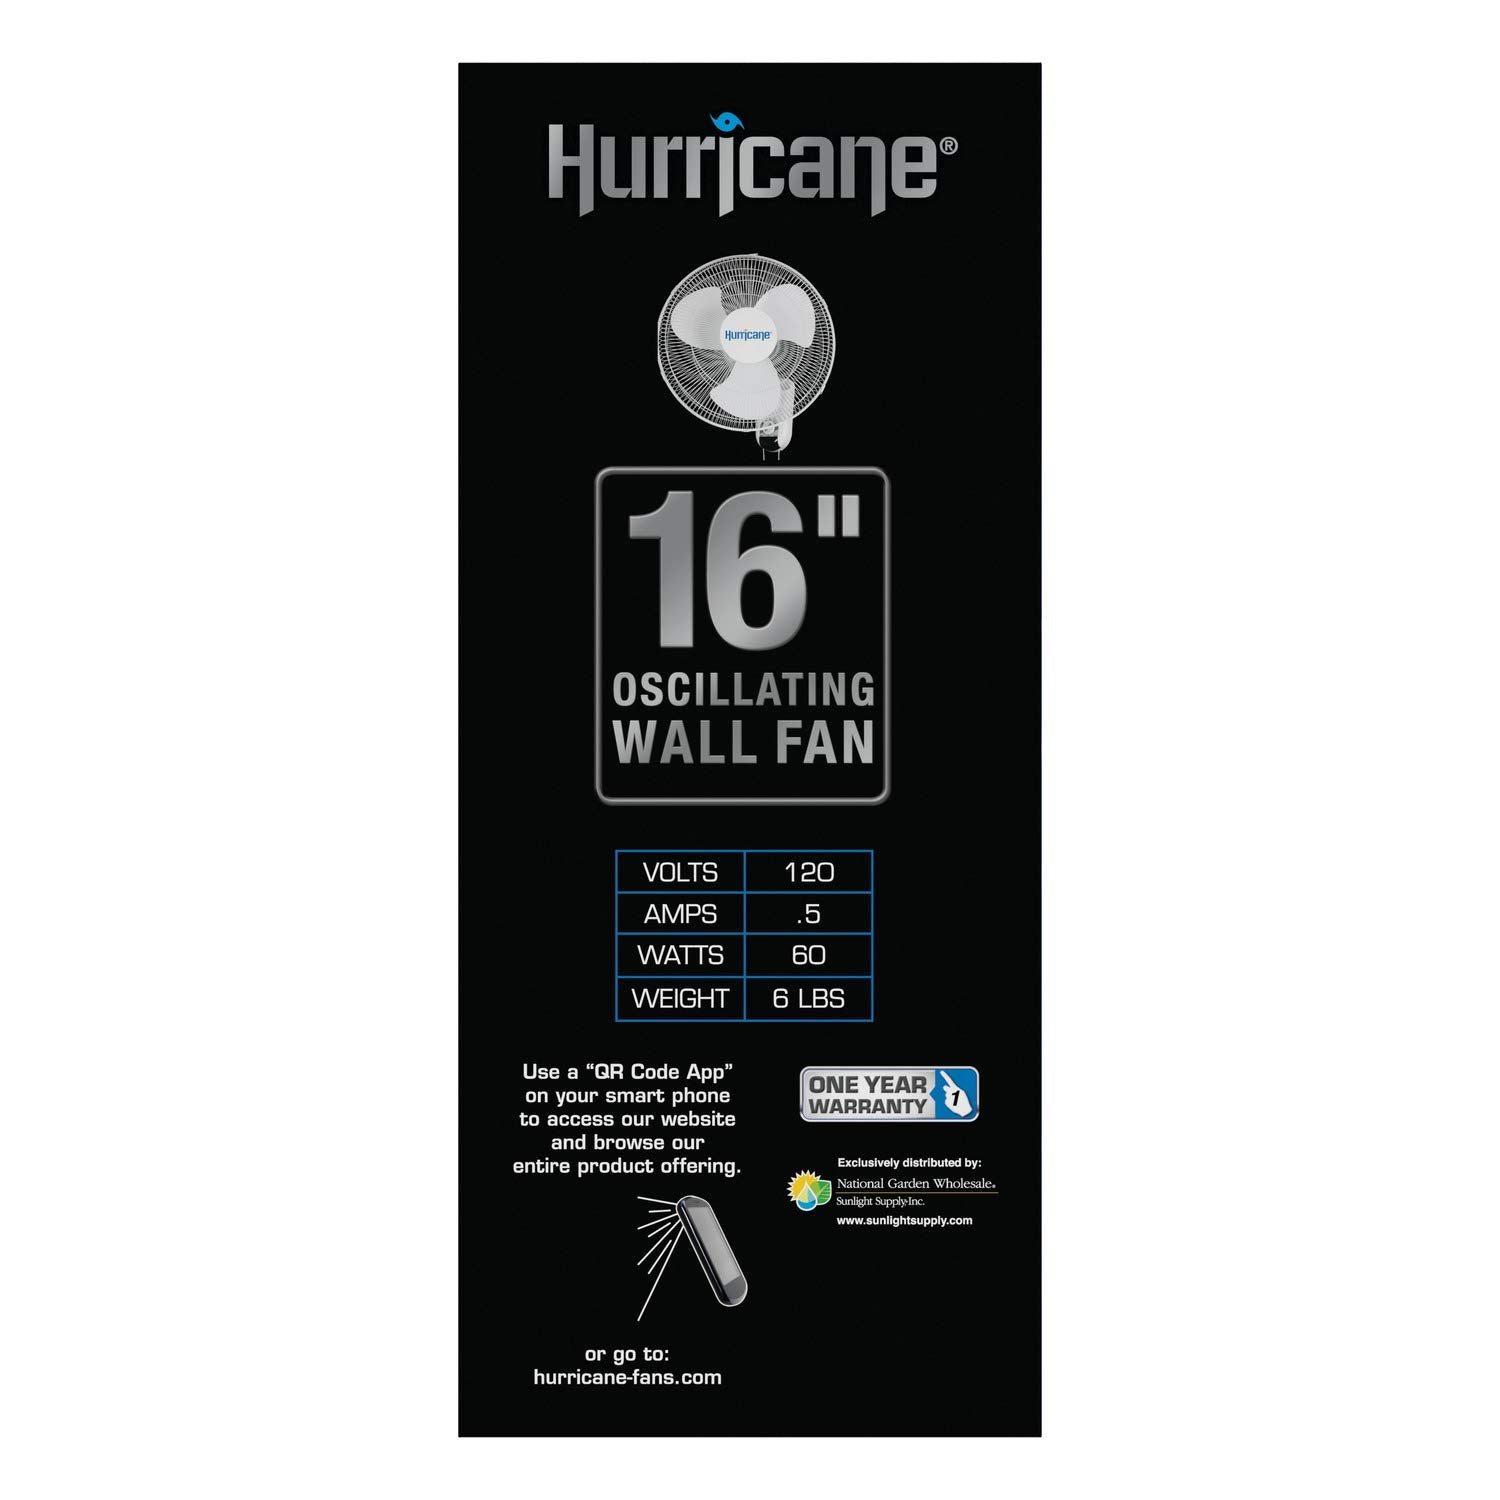 Hurricane® Classic Oscillating Wall Mount Fan 16" - HGC736503